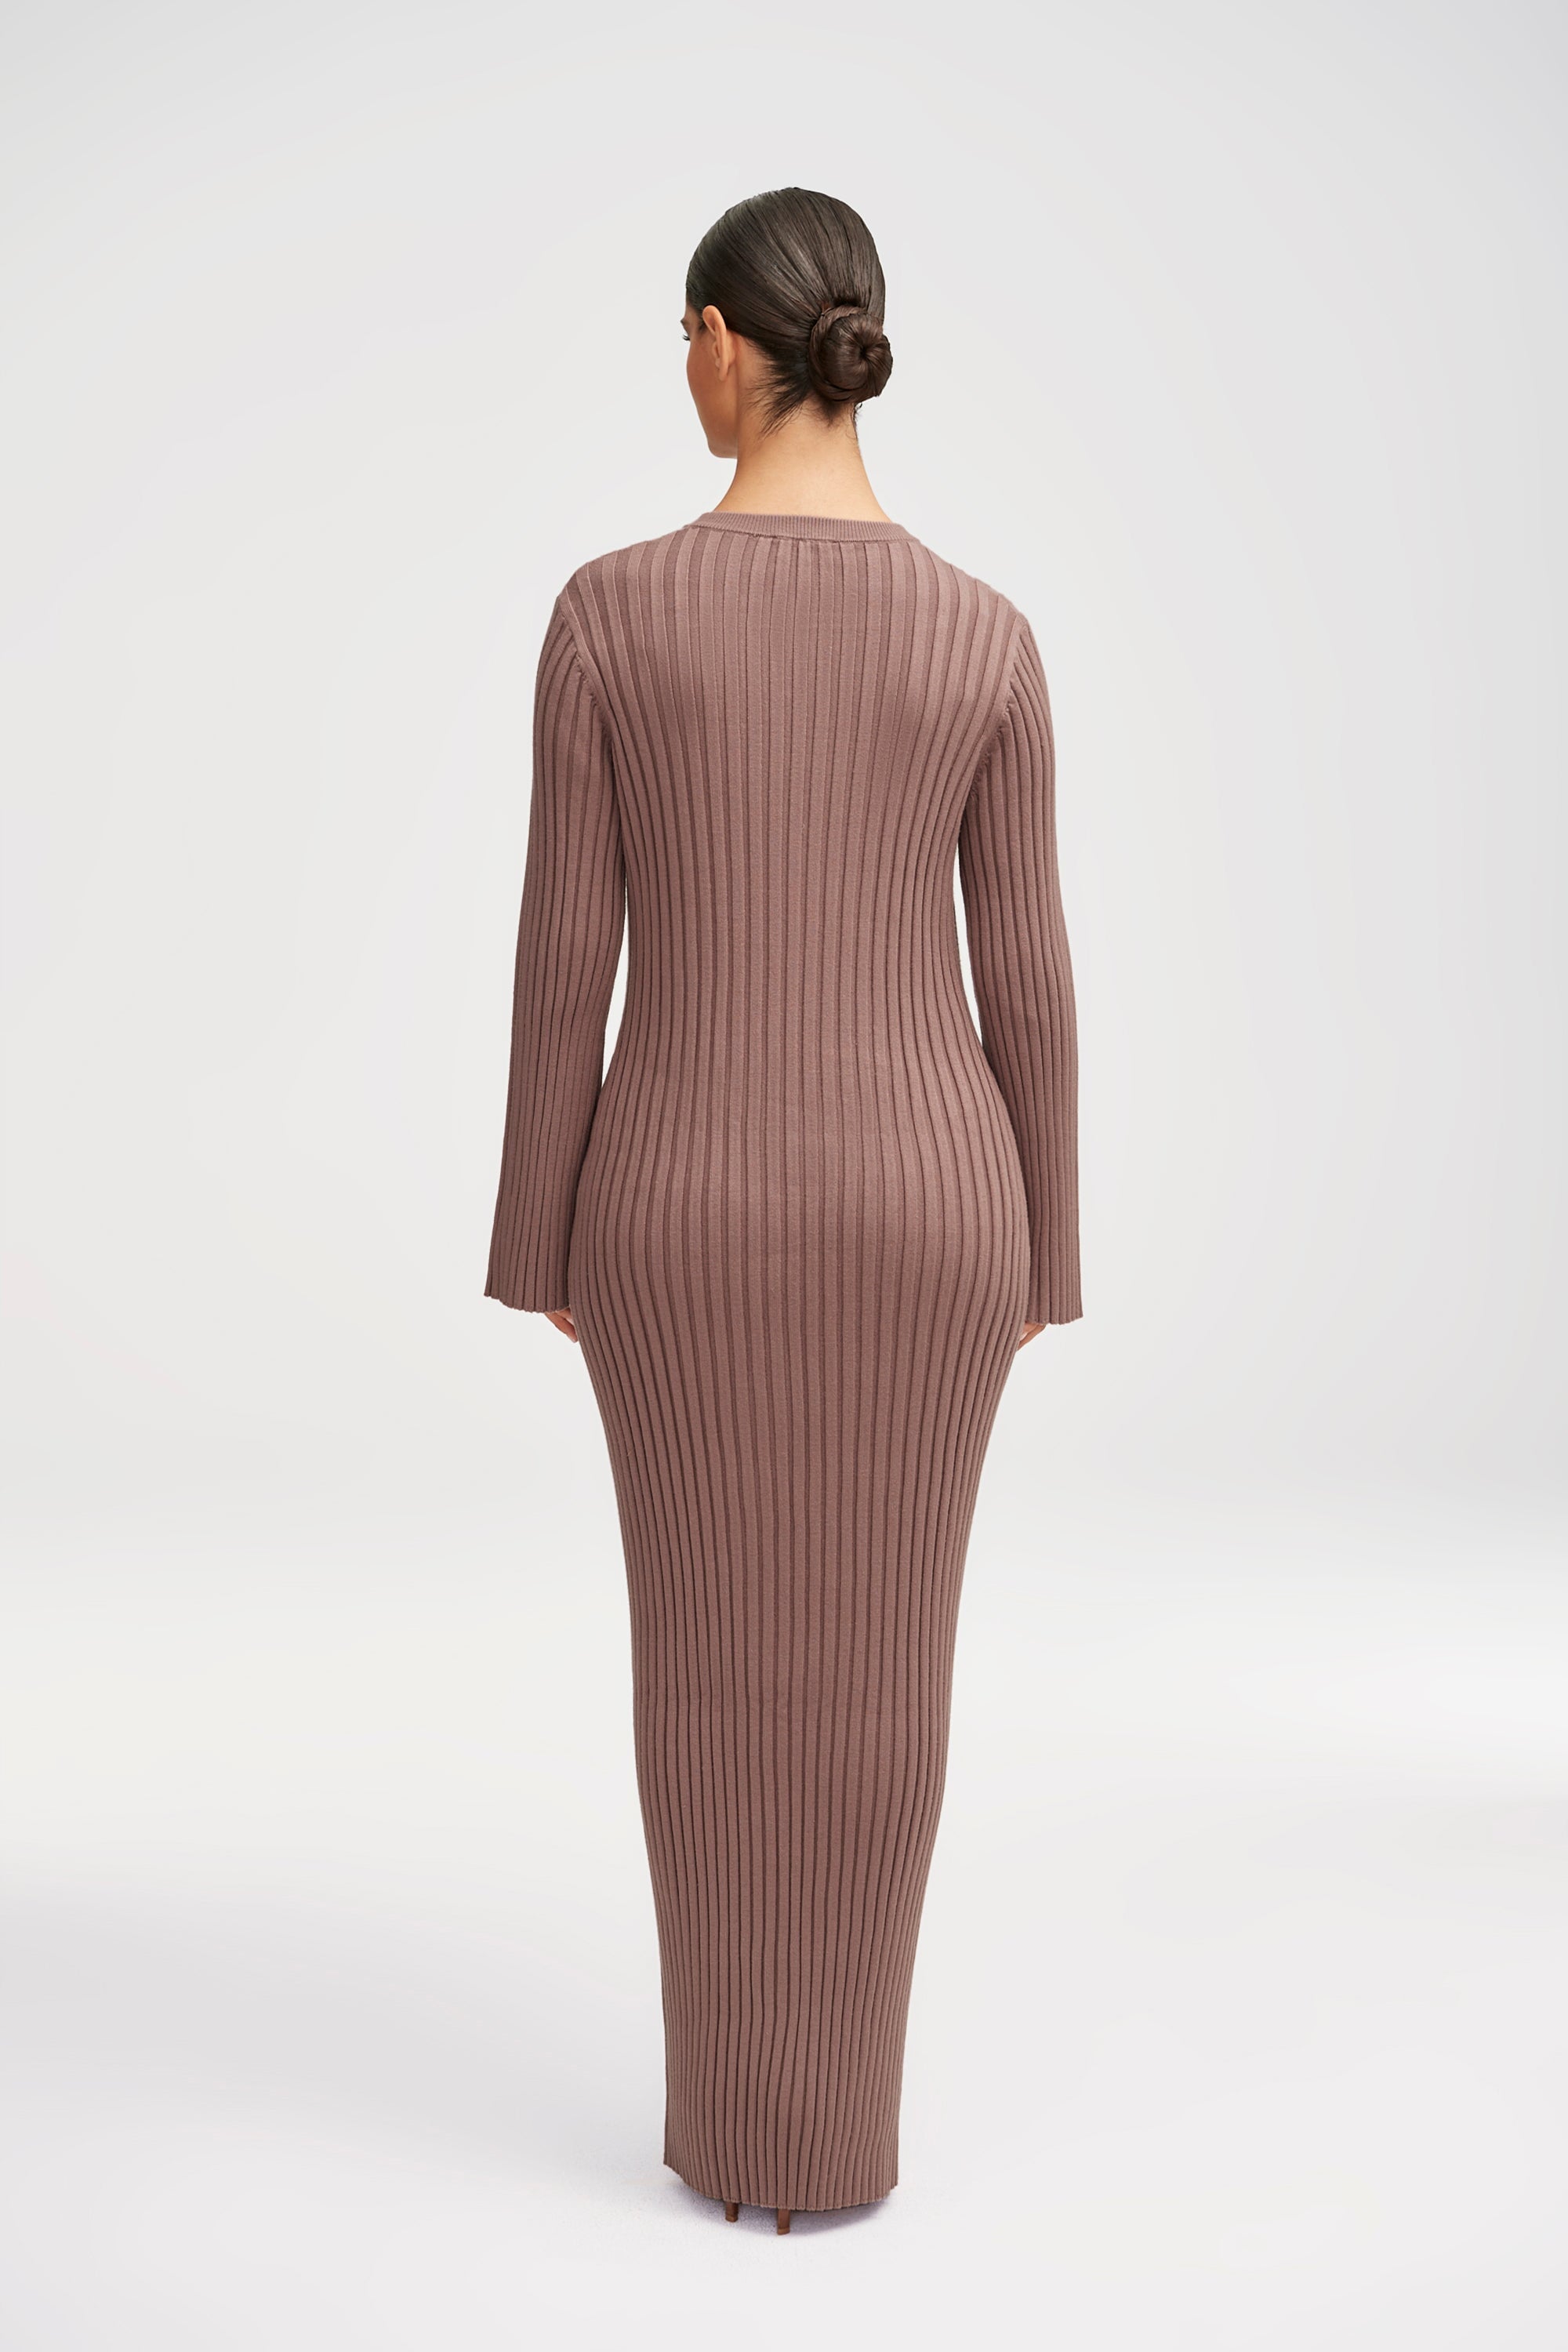 Melanie Ribbed Knit Maxi Dress - Taupe Clothing saigonodysseyhotel 